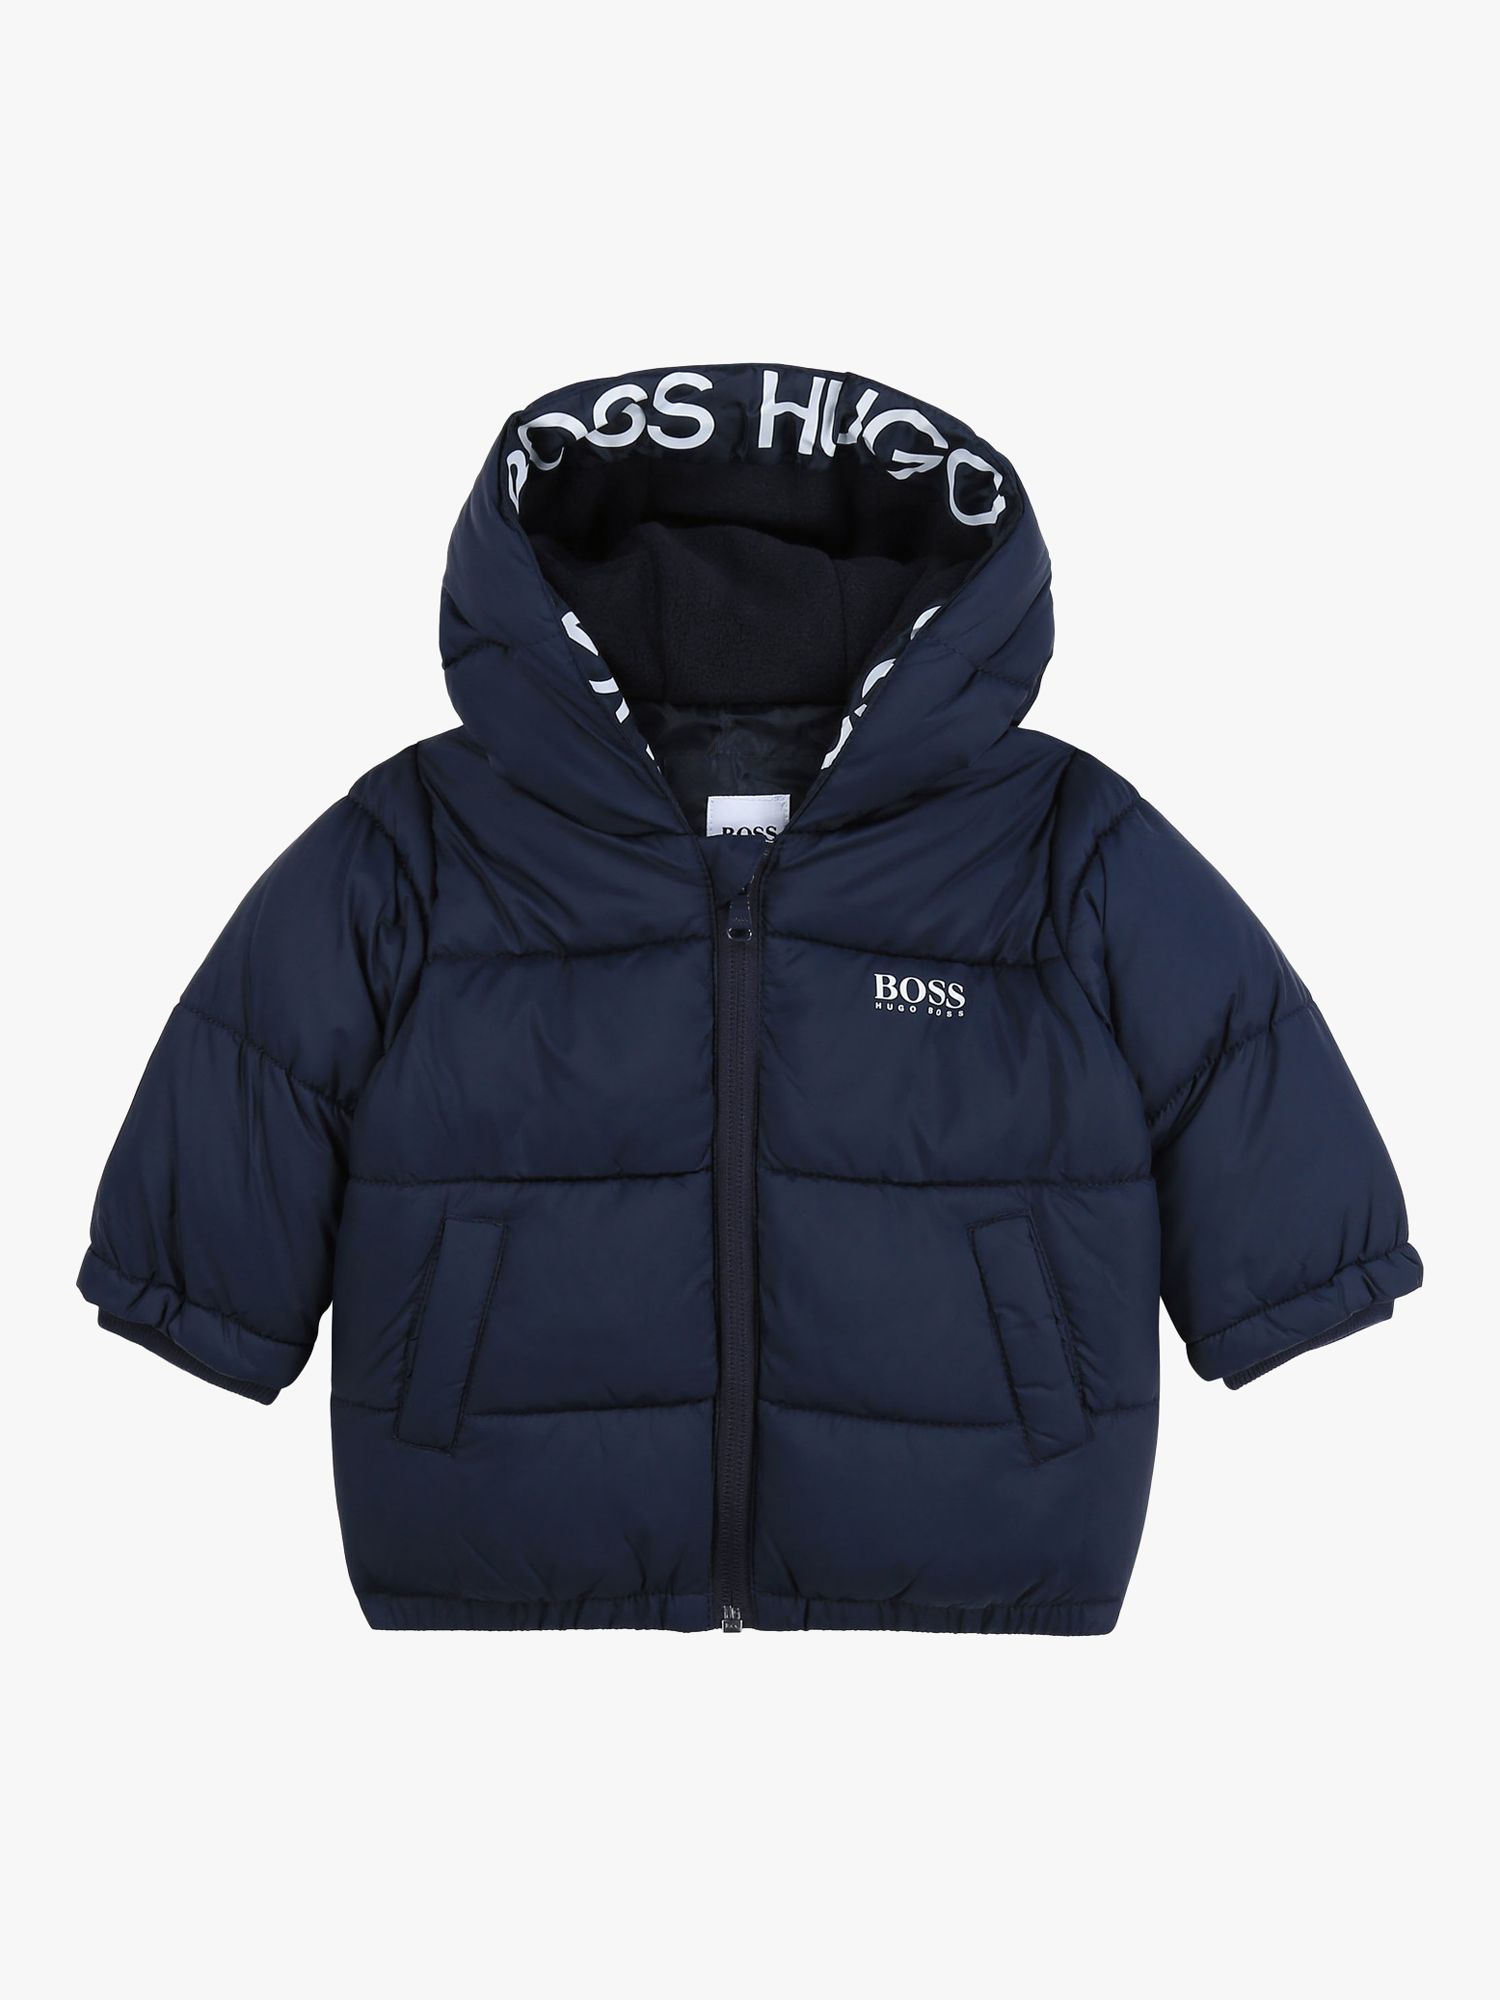 hugo boss packable jacket